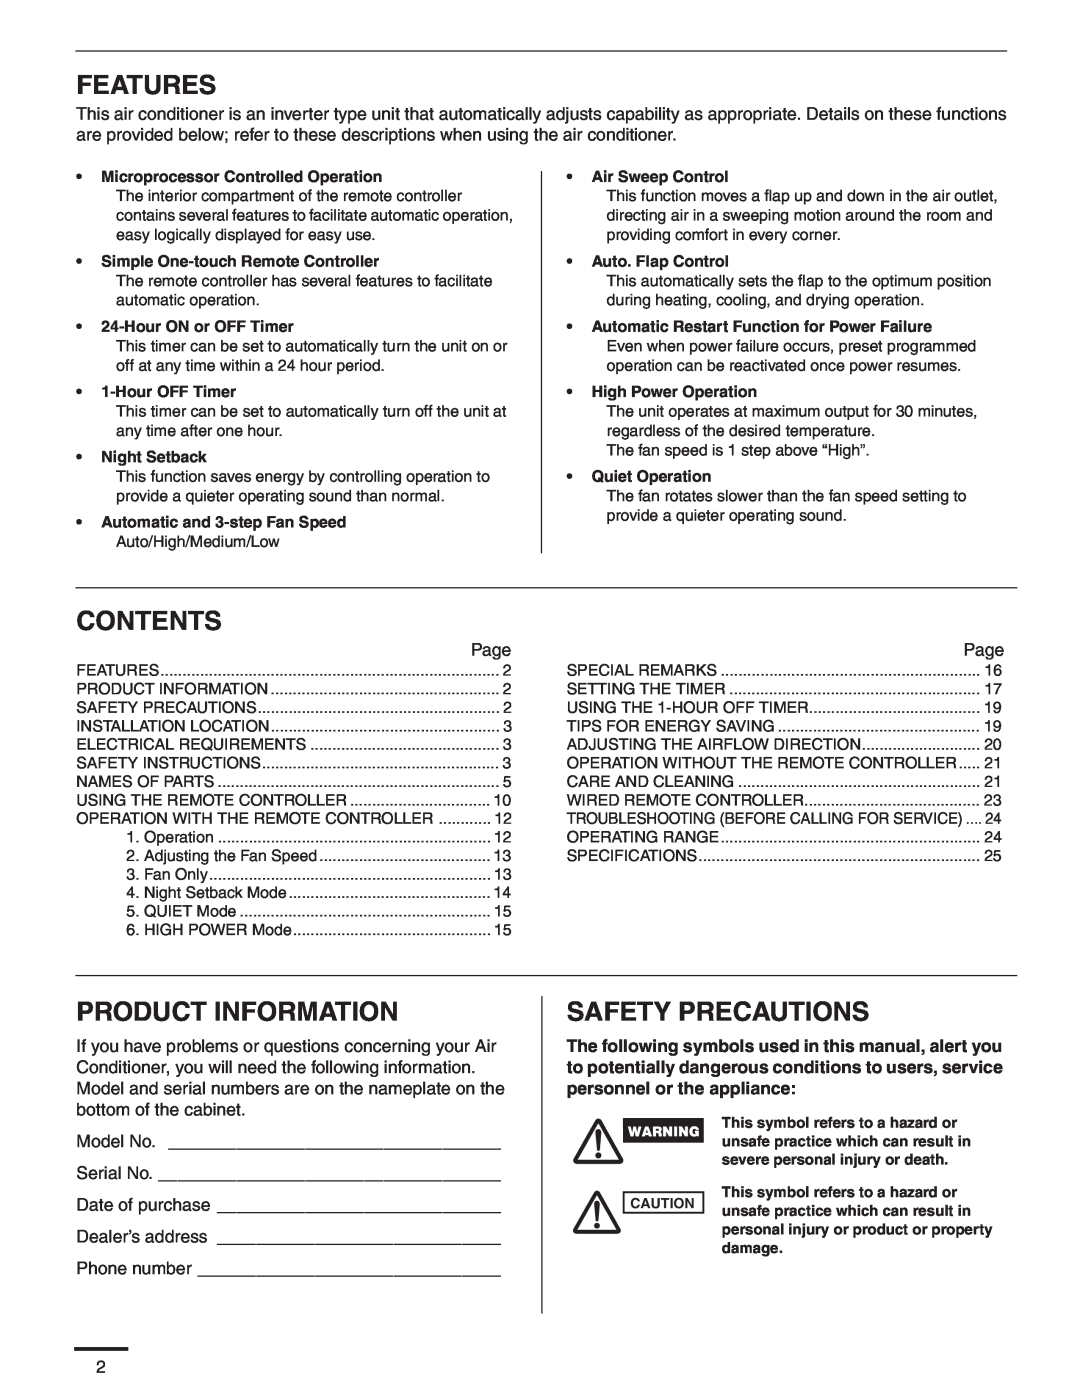 Panasonic CU-KS18NKU, CS-KS18NKU service manual Features, Contents, Product Information, Safety Precautions 